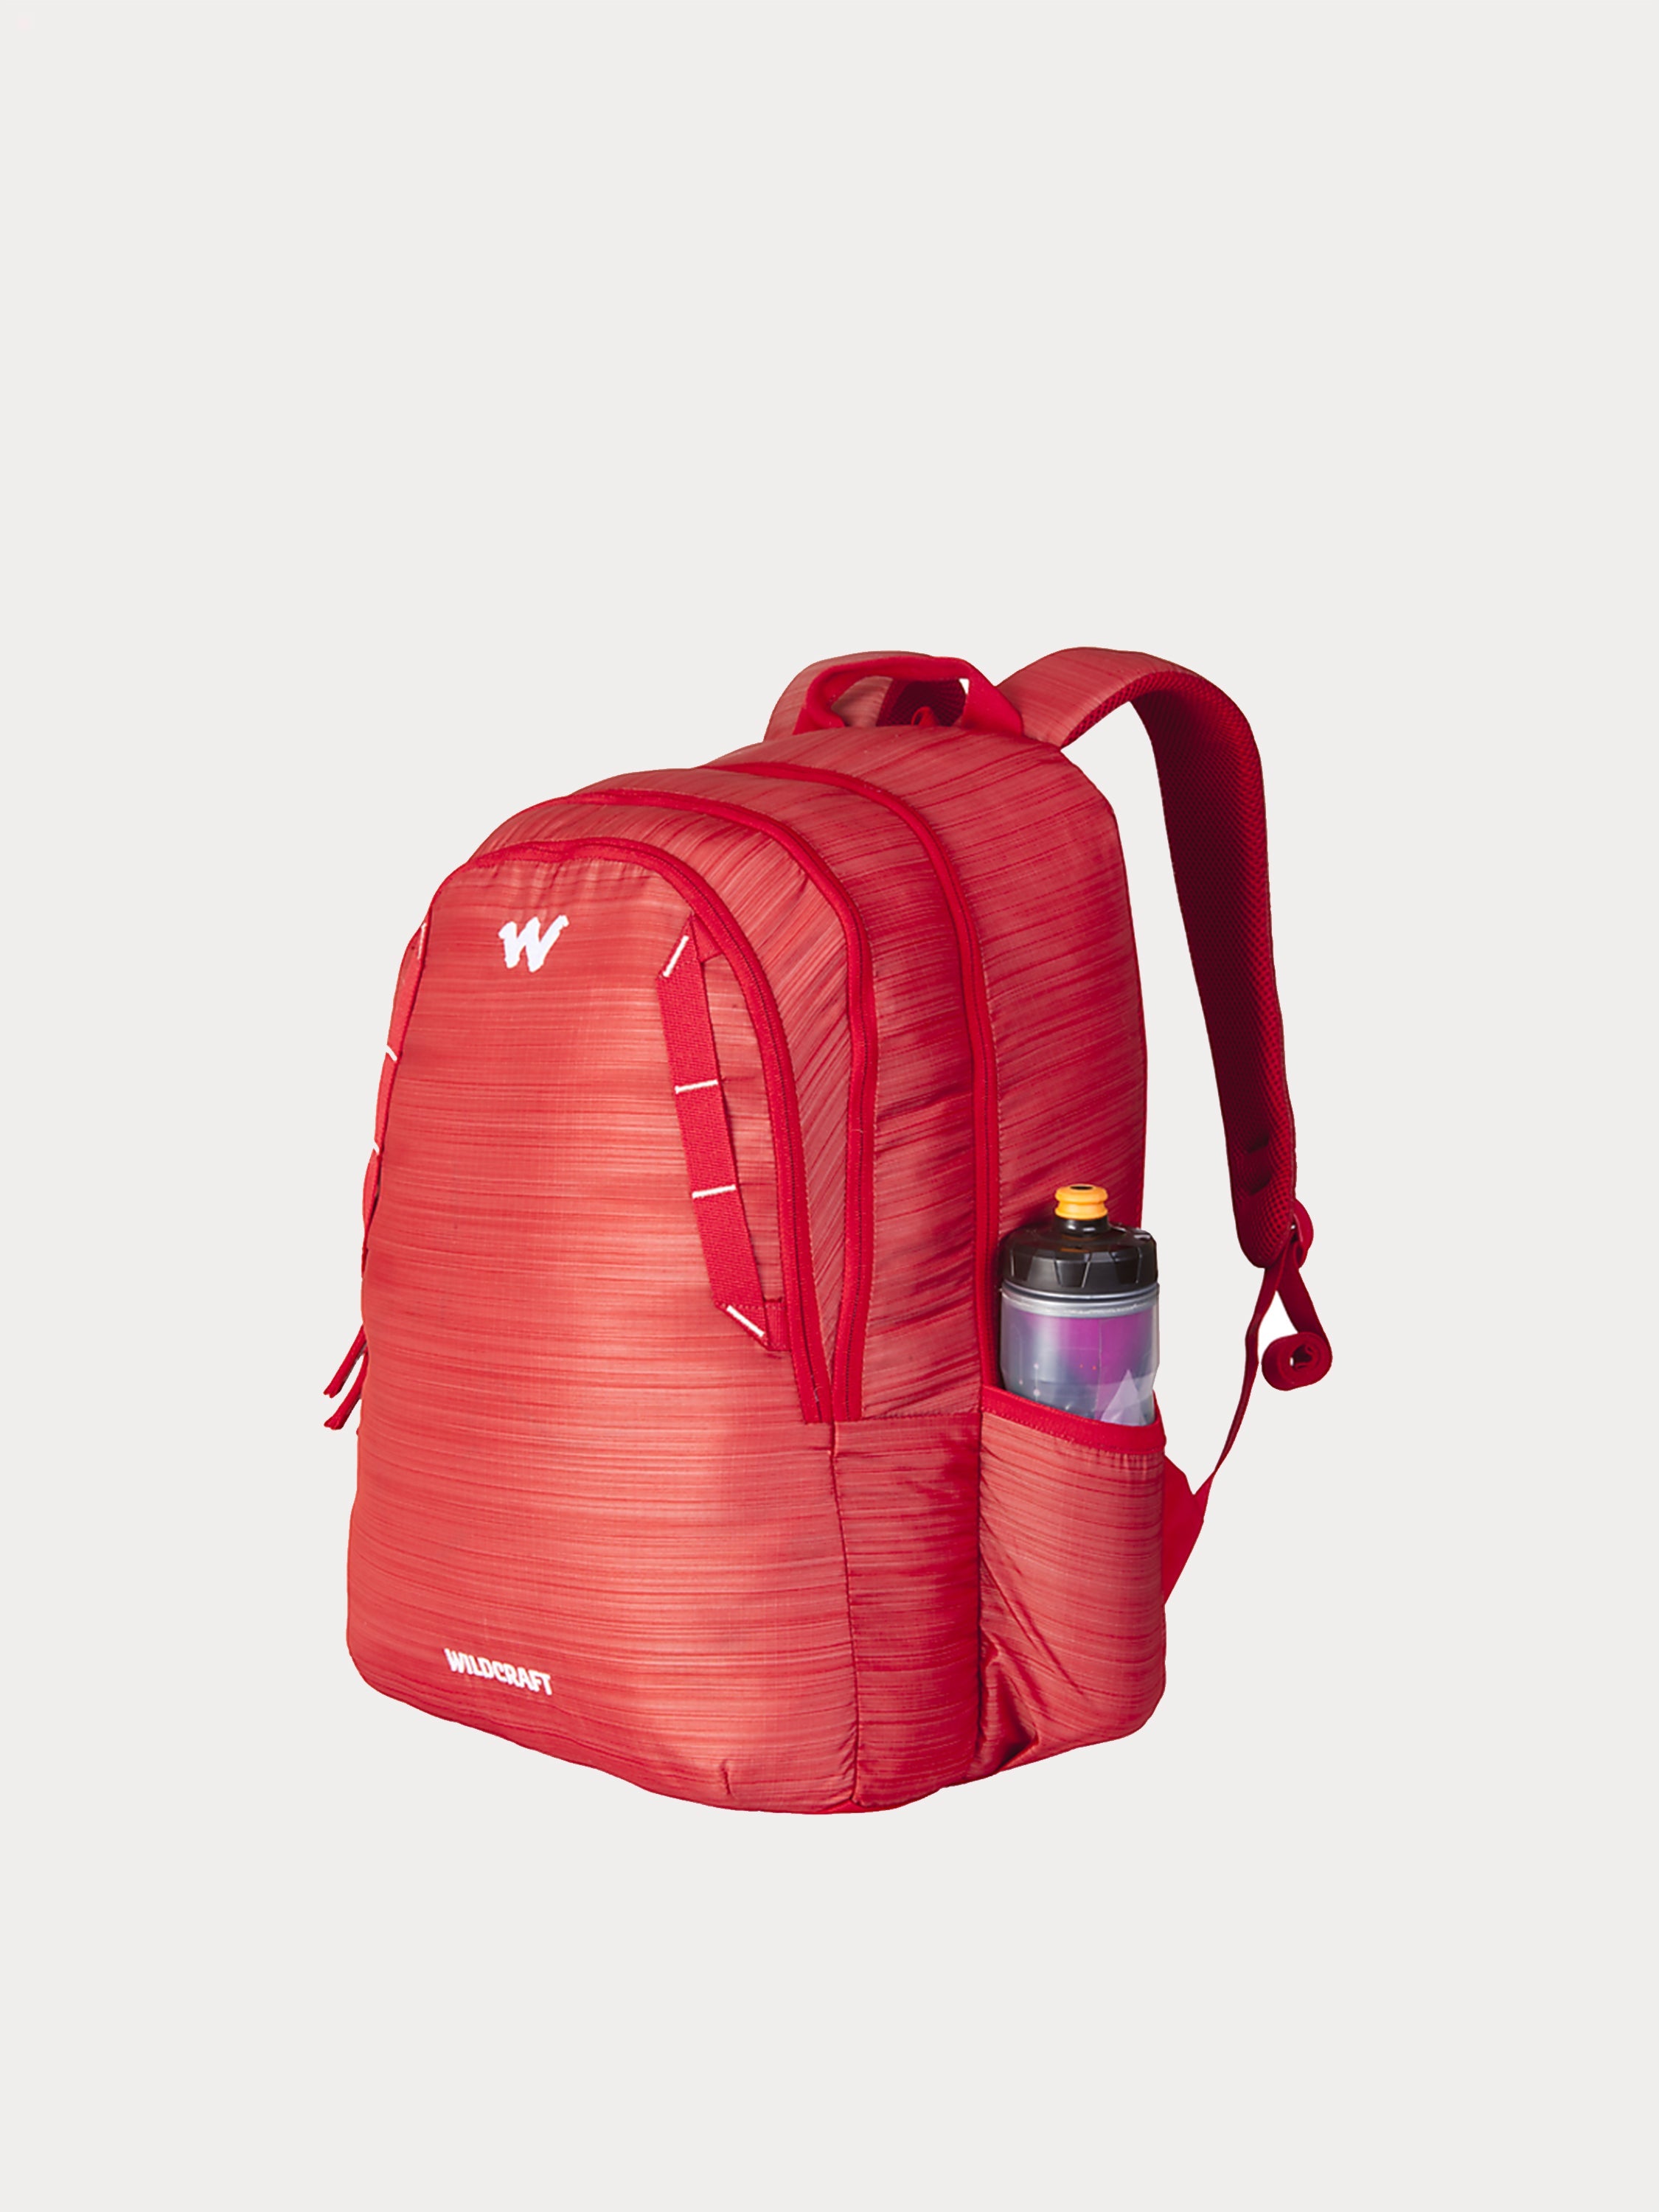 Wildcraft 4 Flare Backpack